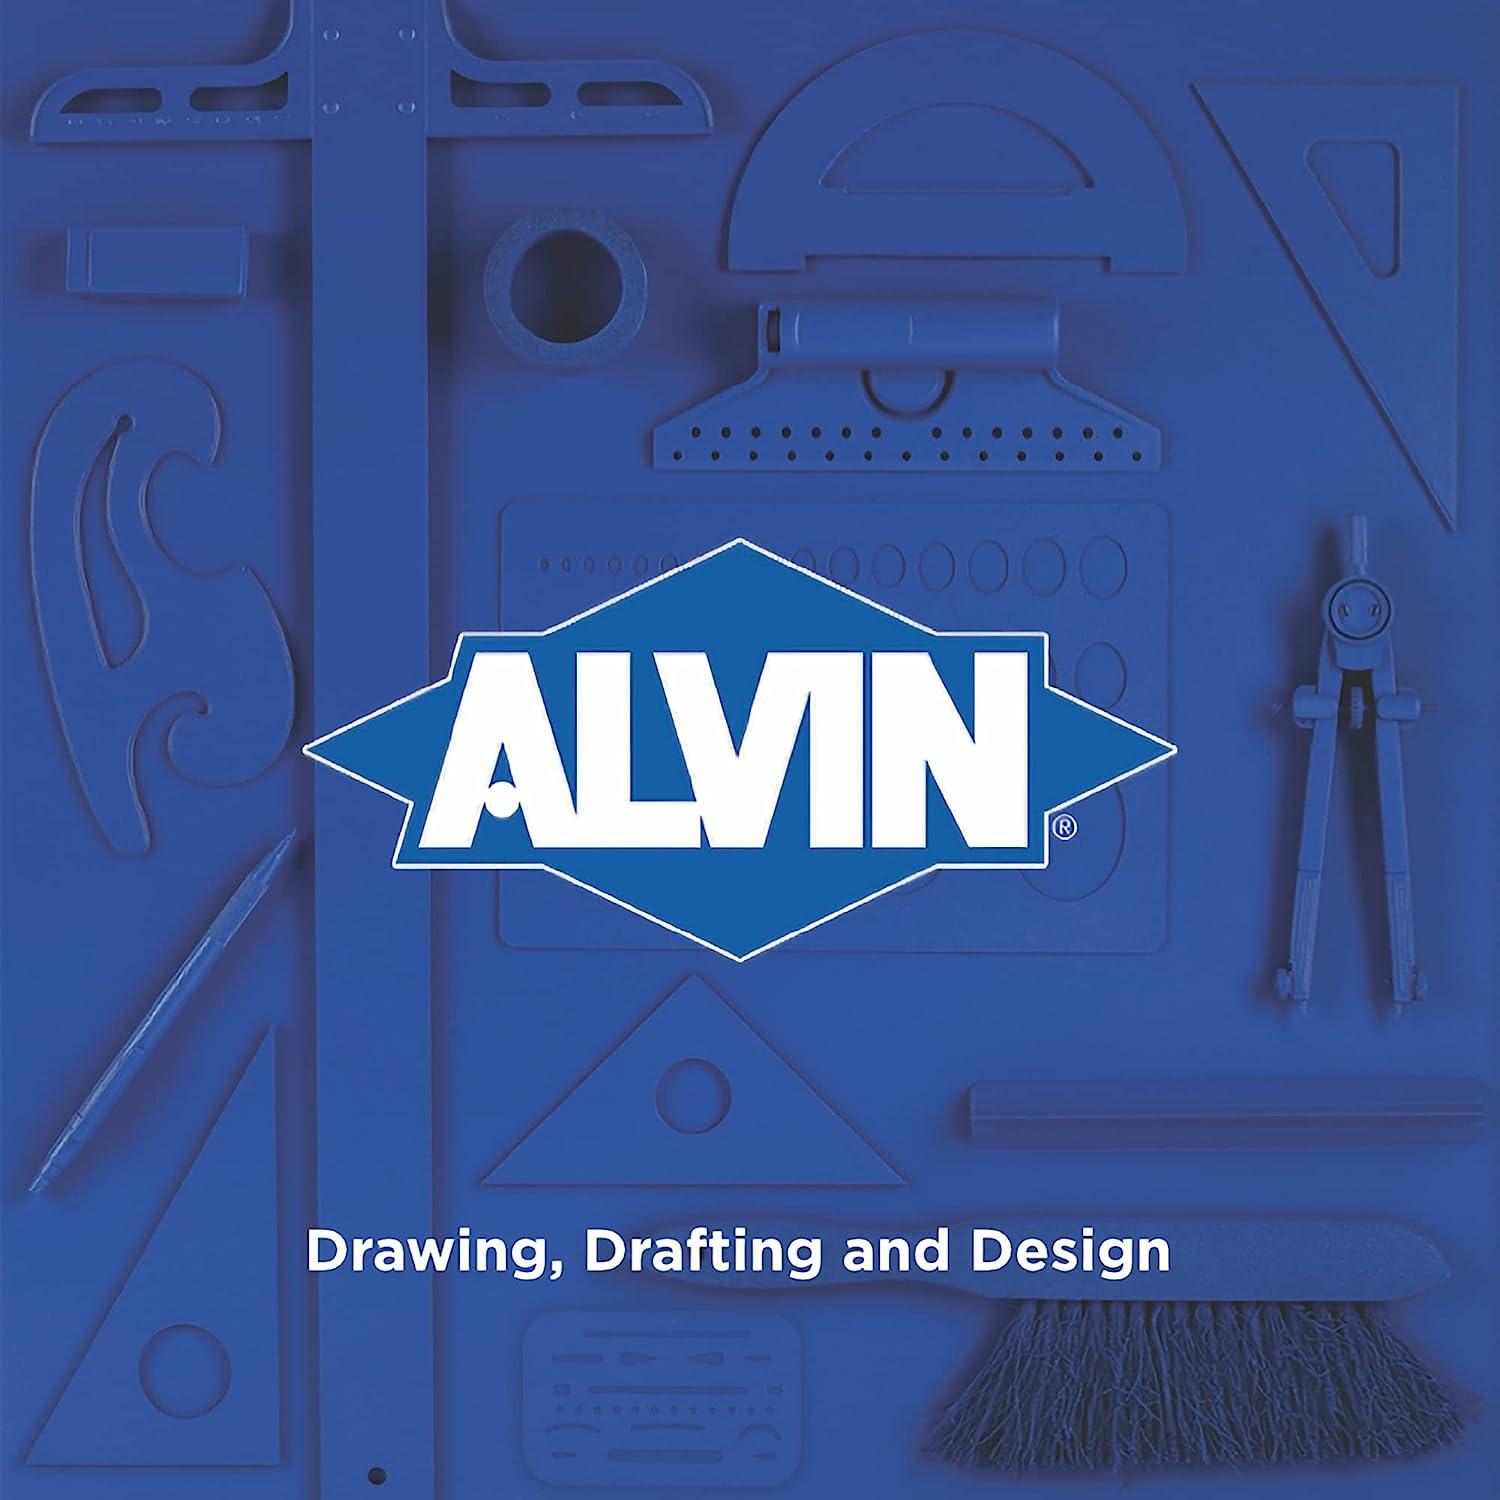 Alvin Translucent Professional Self-Healing Cutting Mat